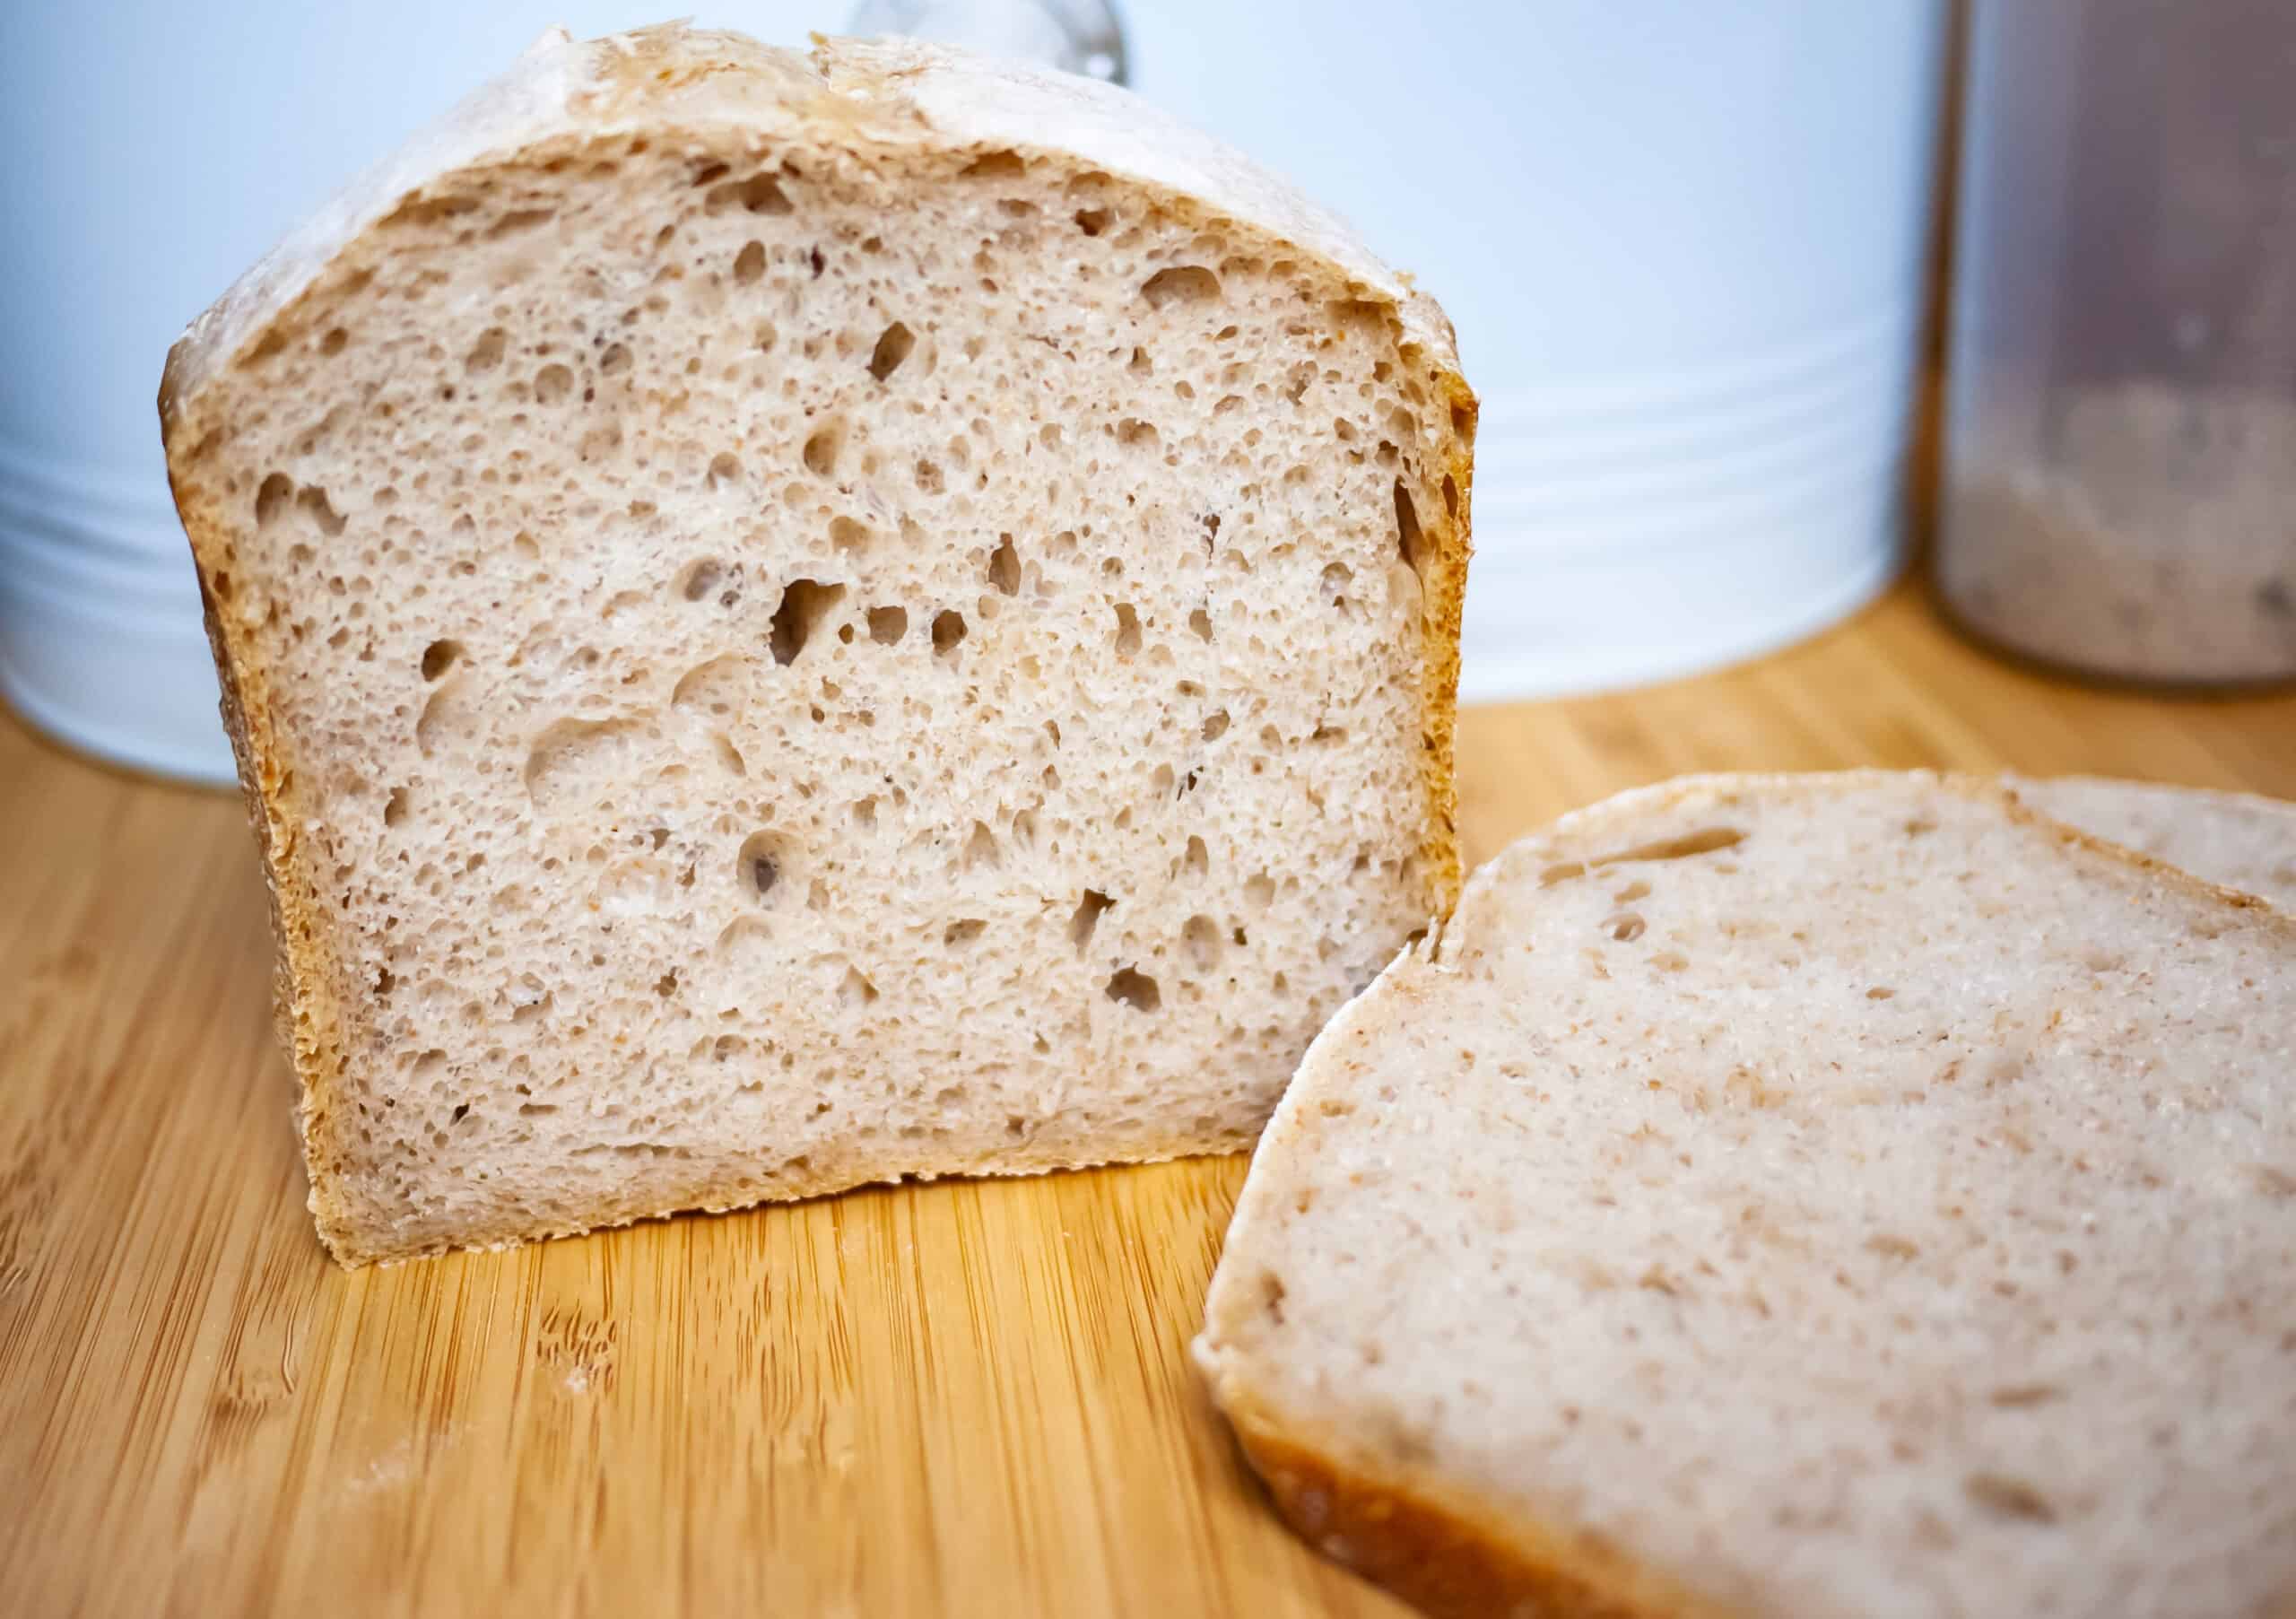 https://www.mygreekdish.com/wp-content/uploads/2021/01/bread-machine-sourdough-bread-scaled.jpg